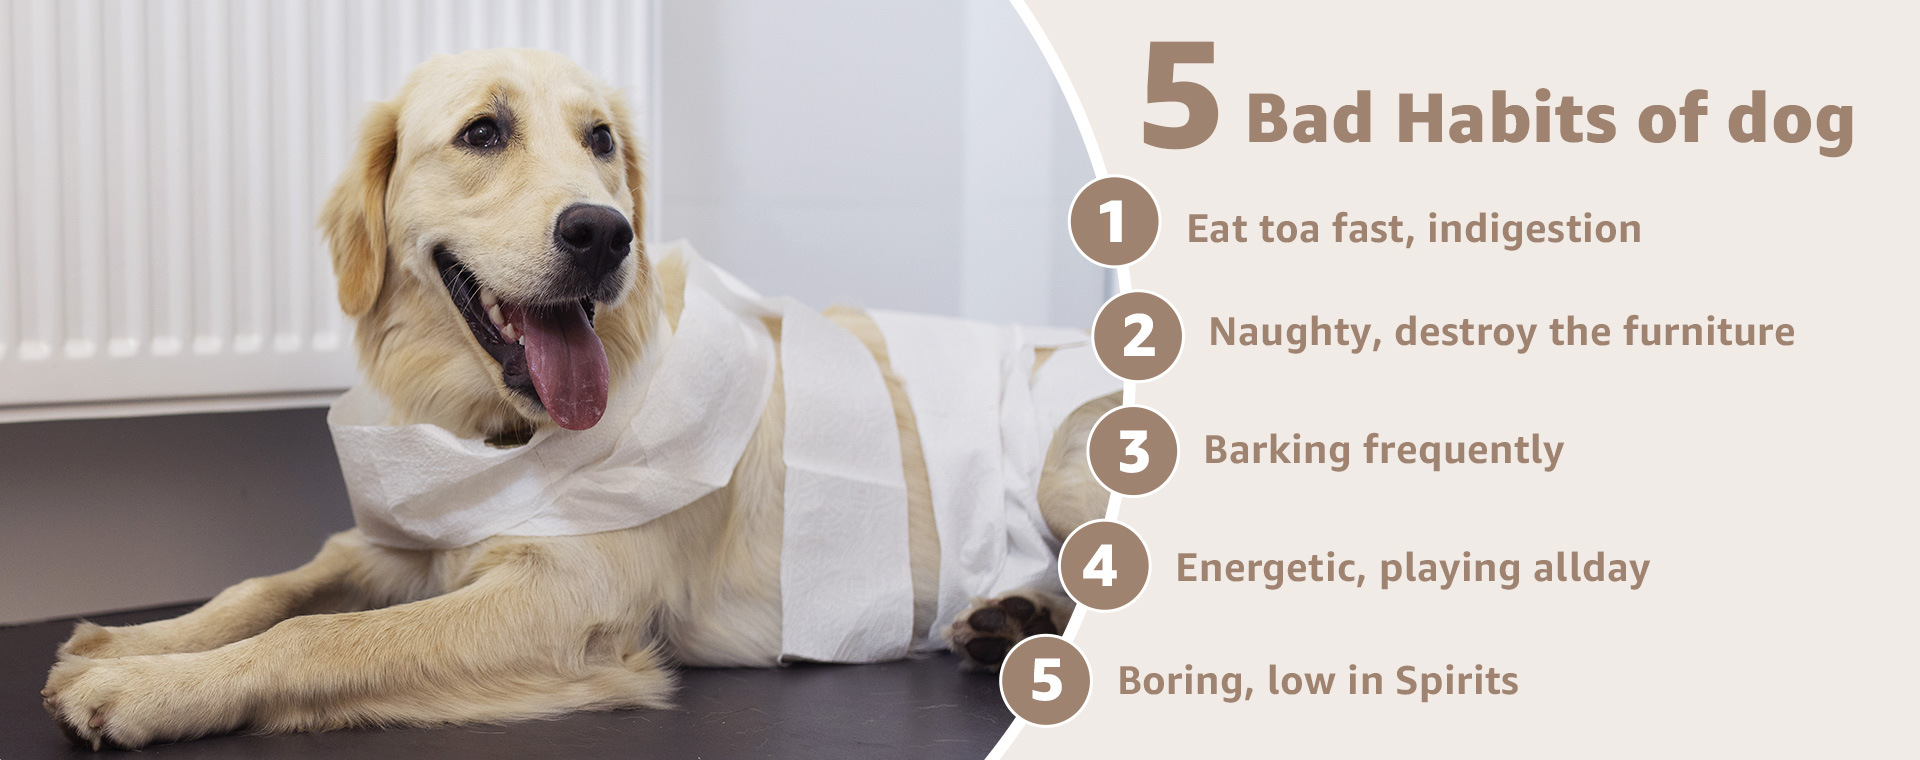 5 bad habits of dog